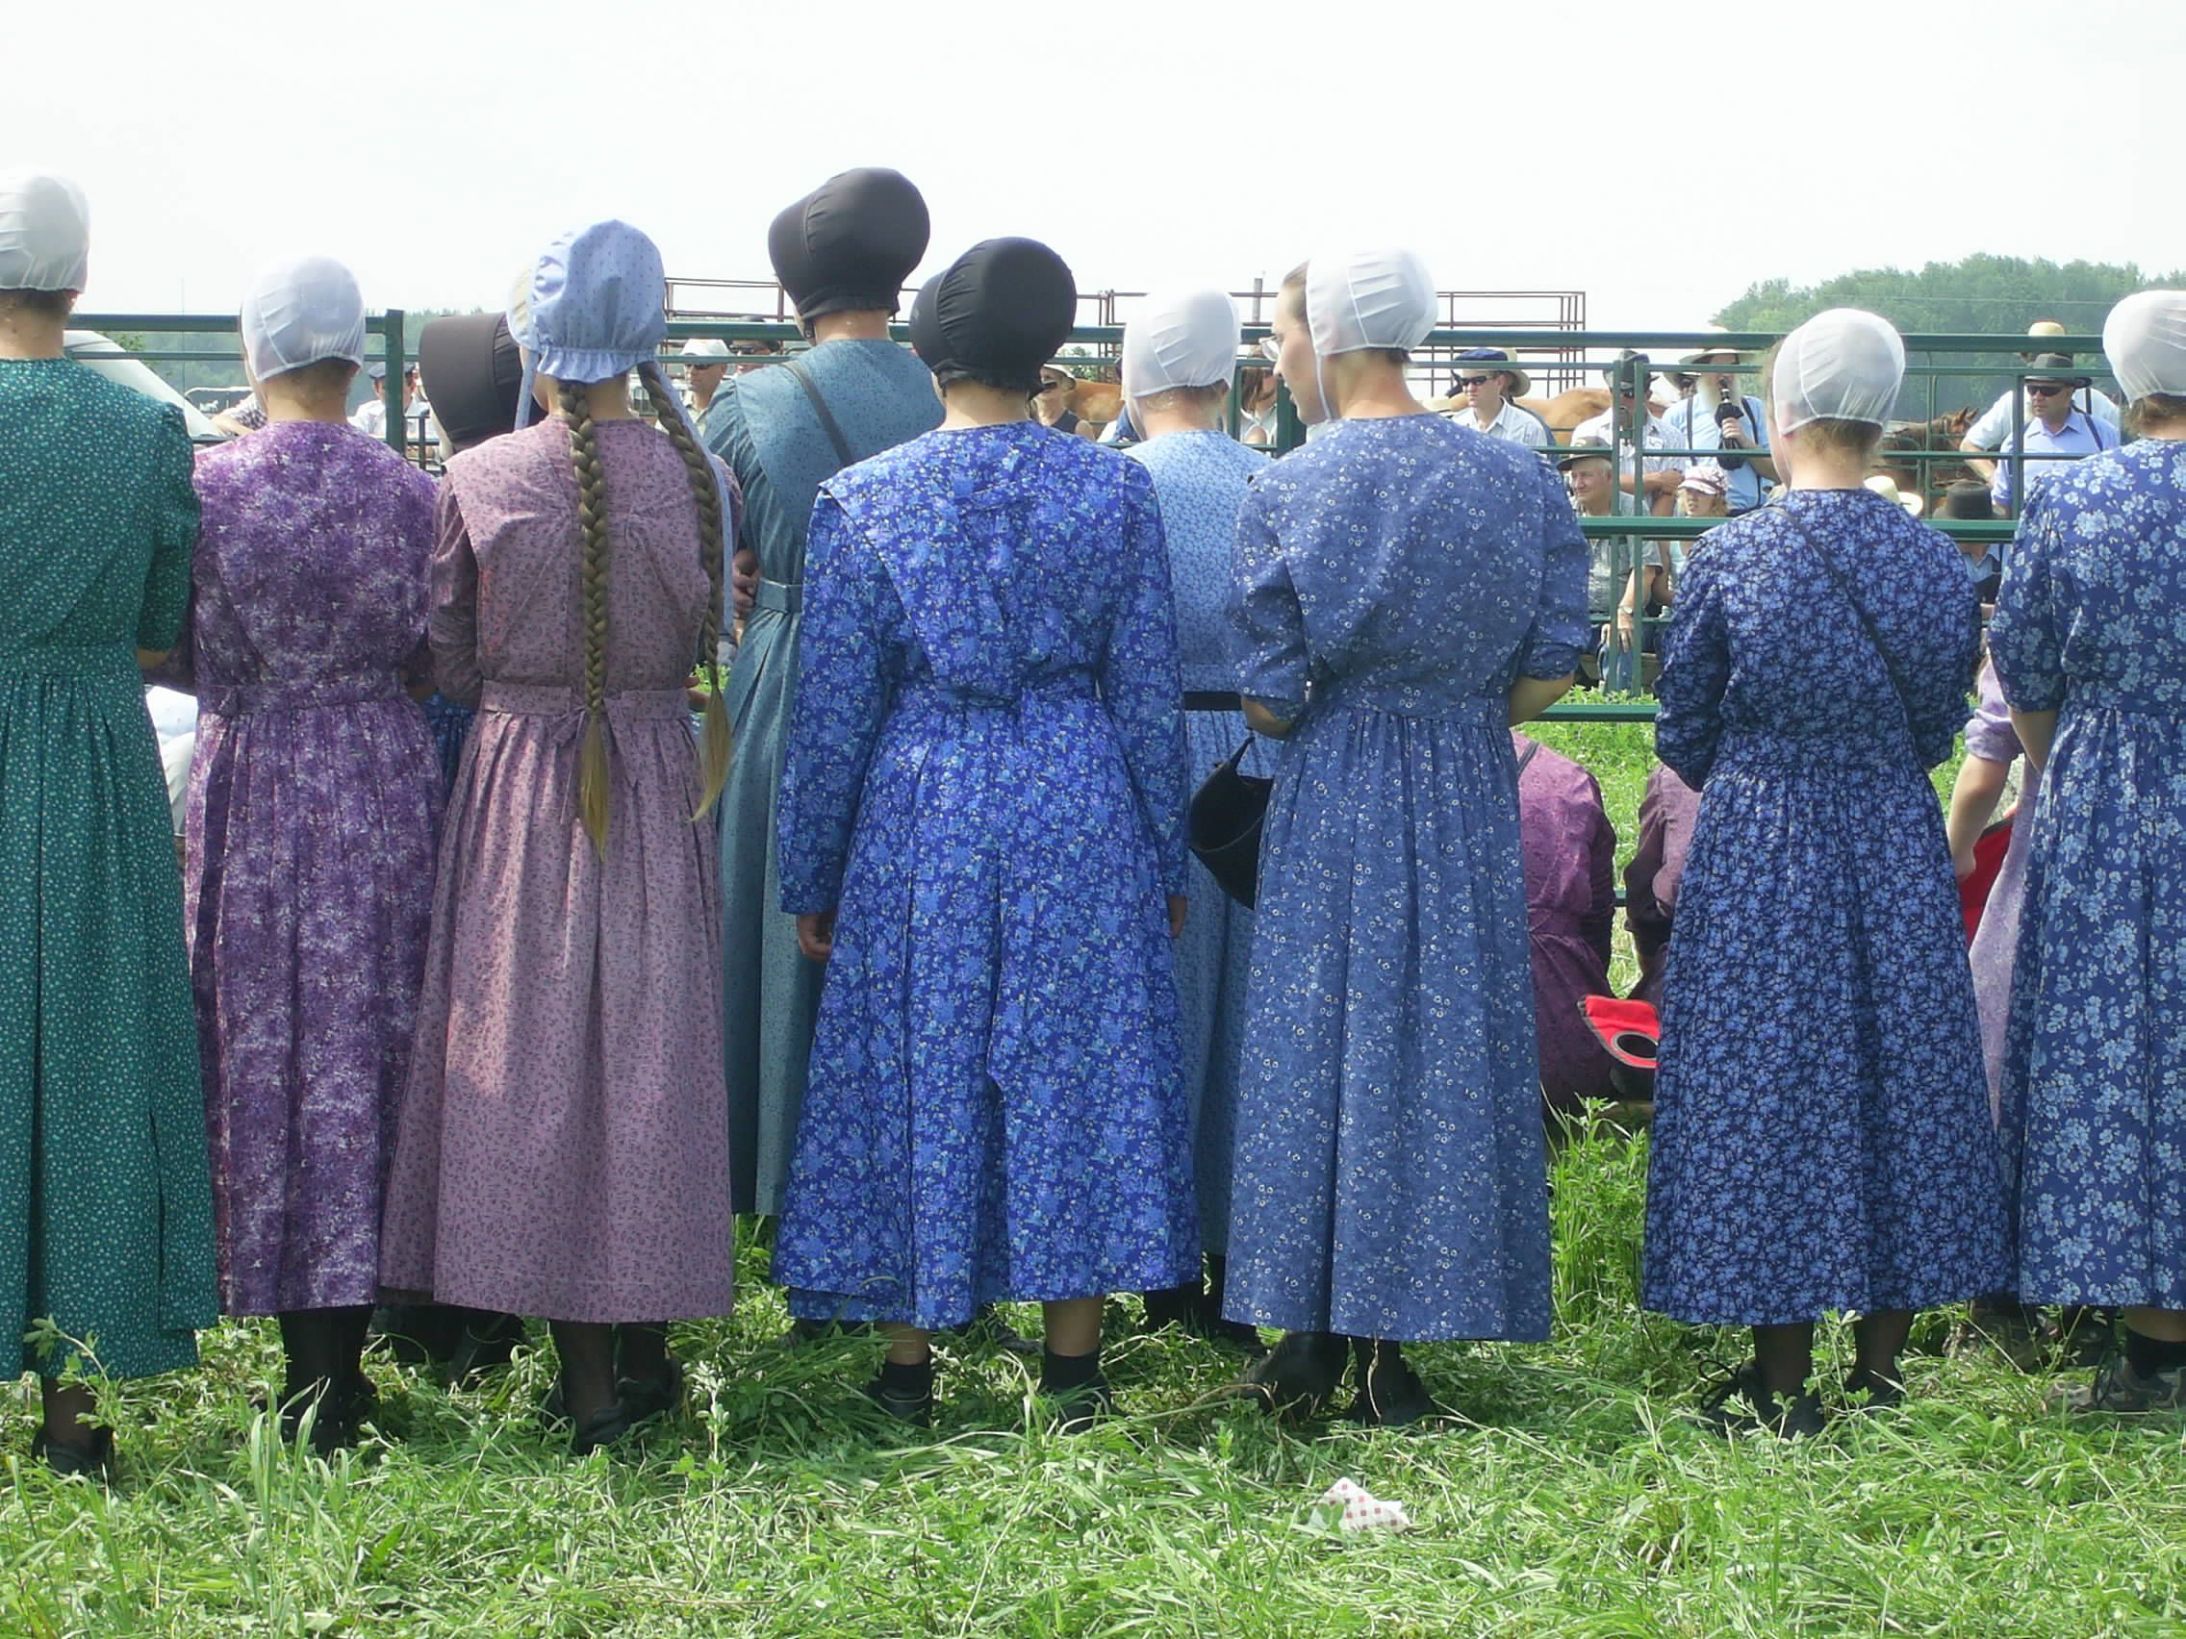 High Quality Amish Women Blank Meme Template